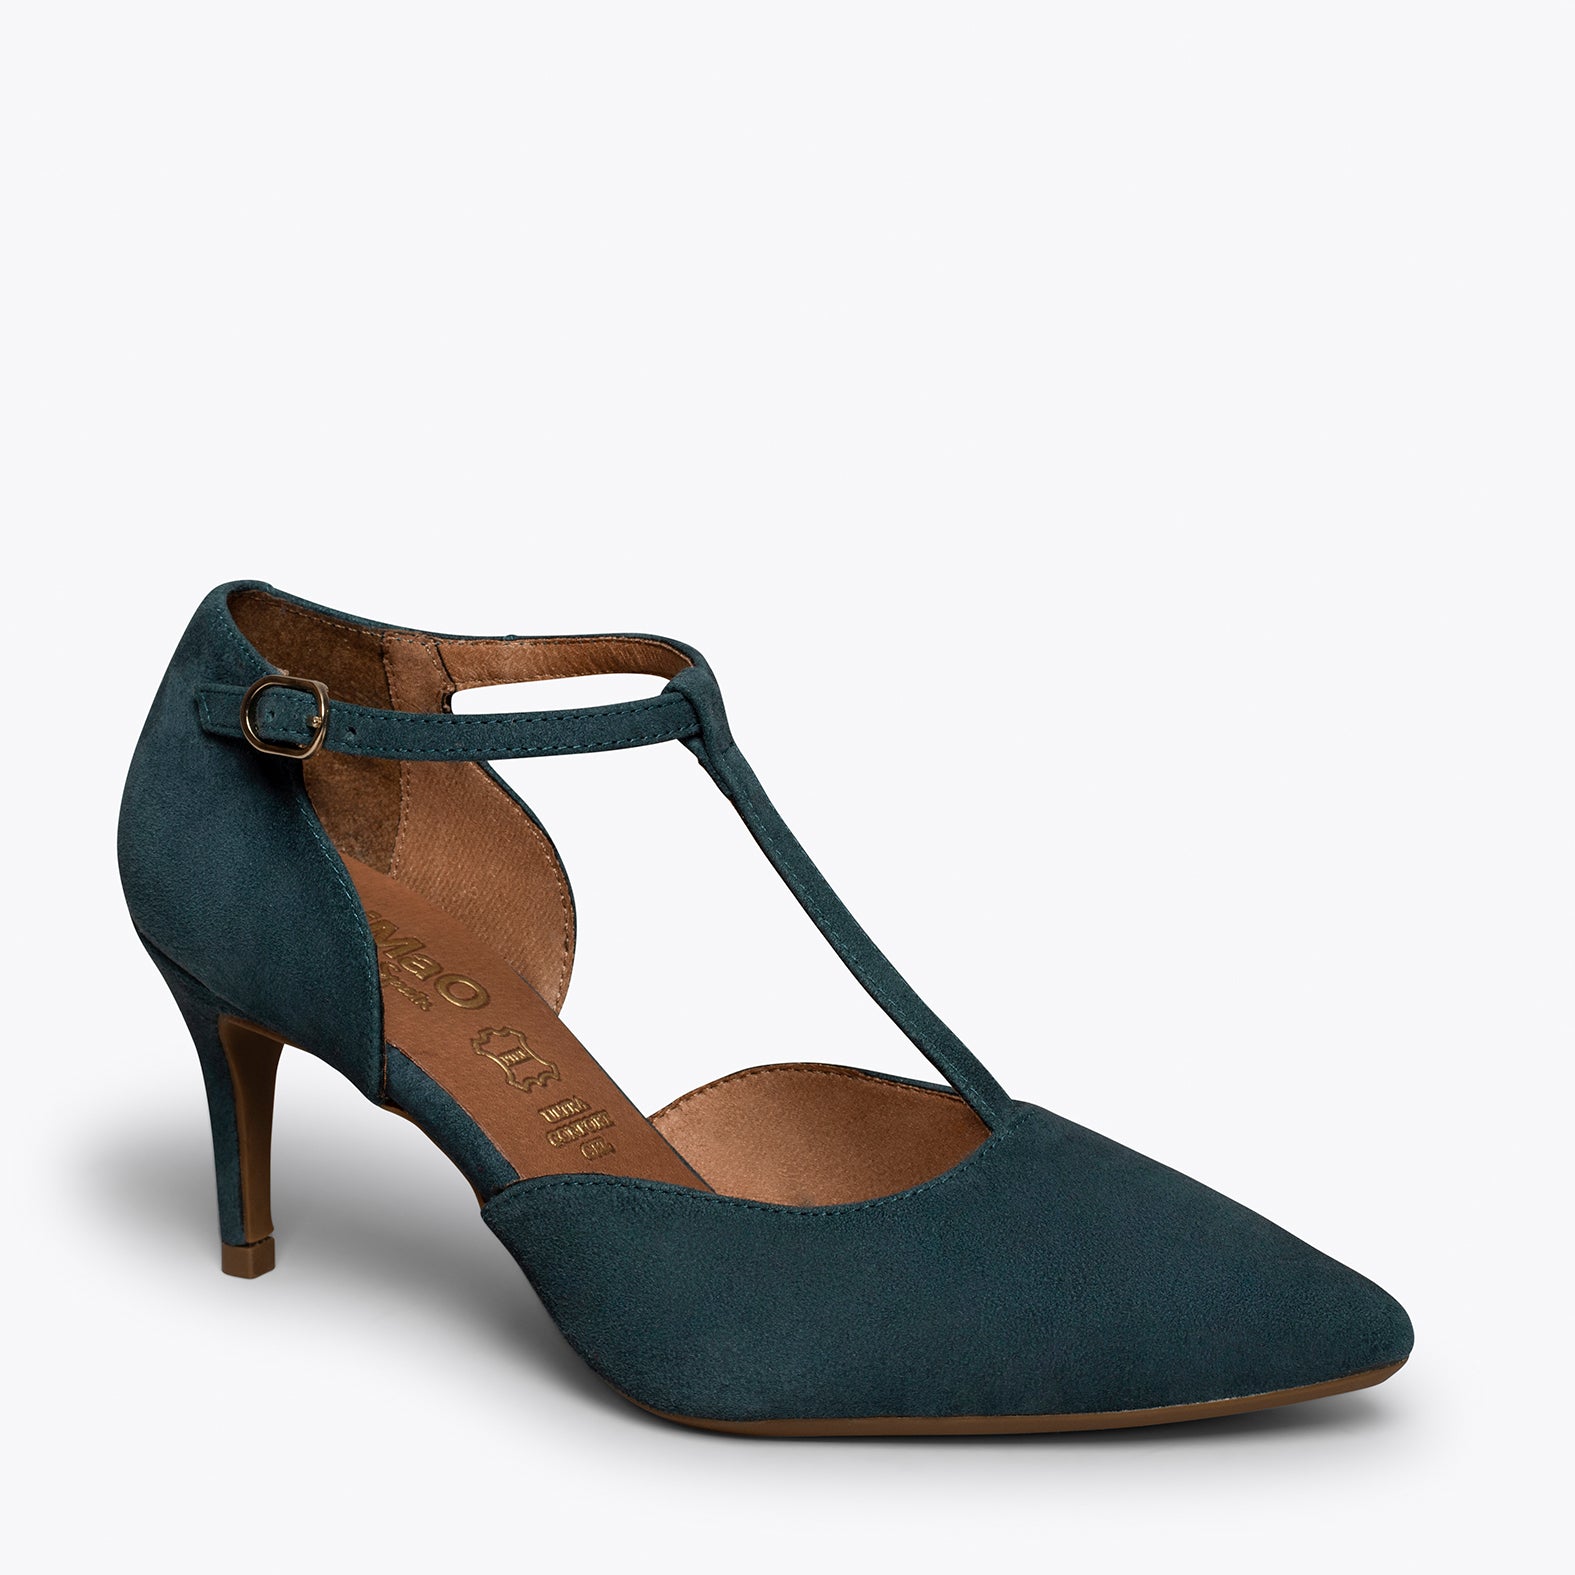 COCKTAIL – TEAL elegant mid heel shoes